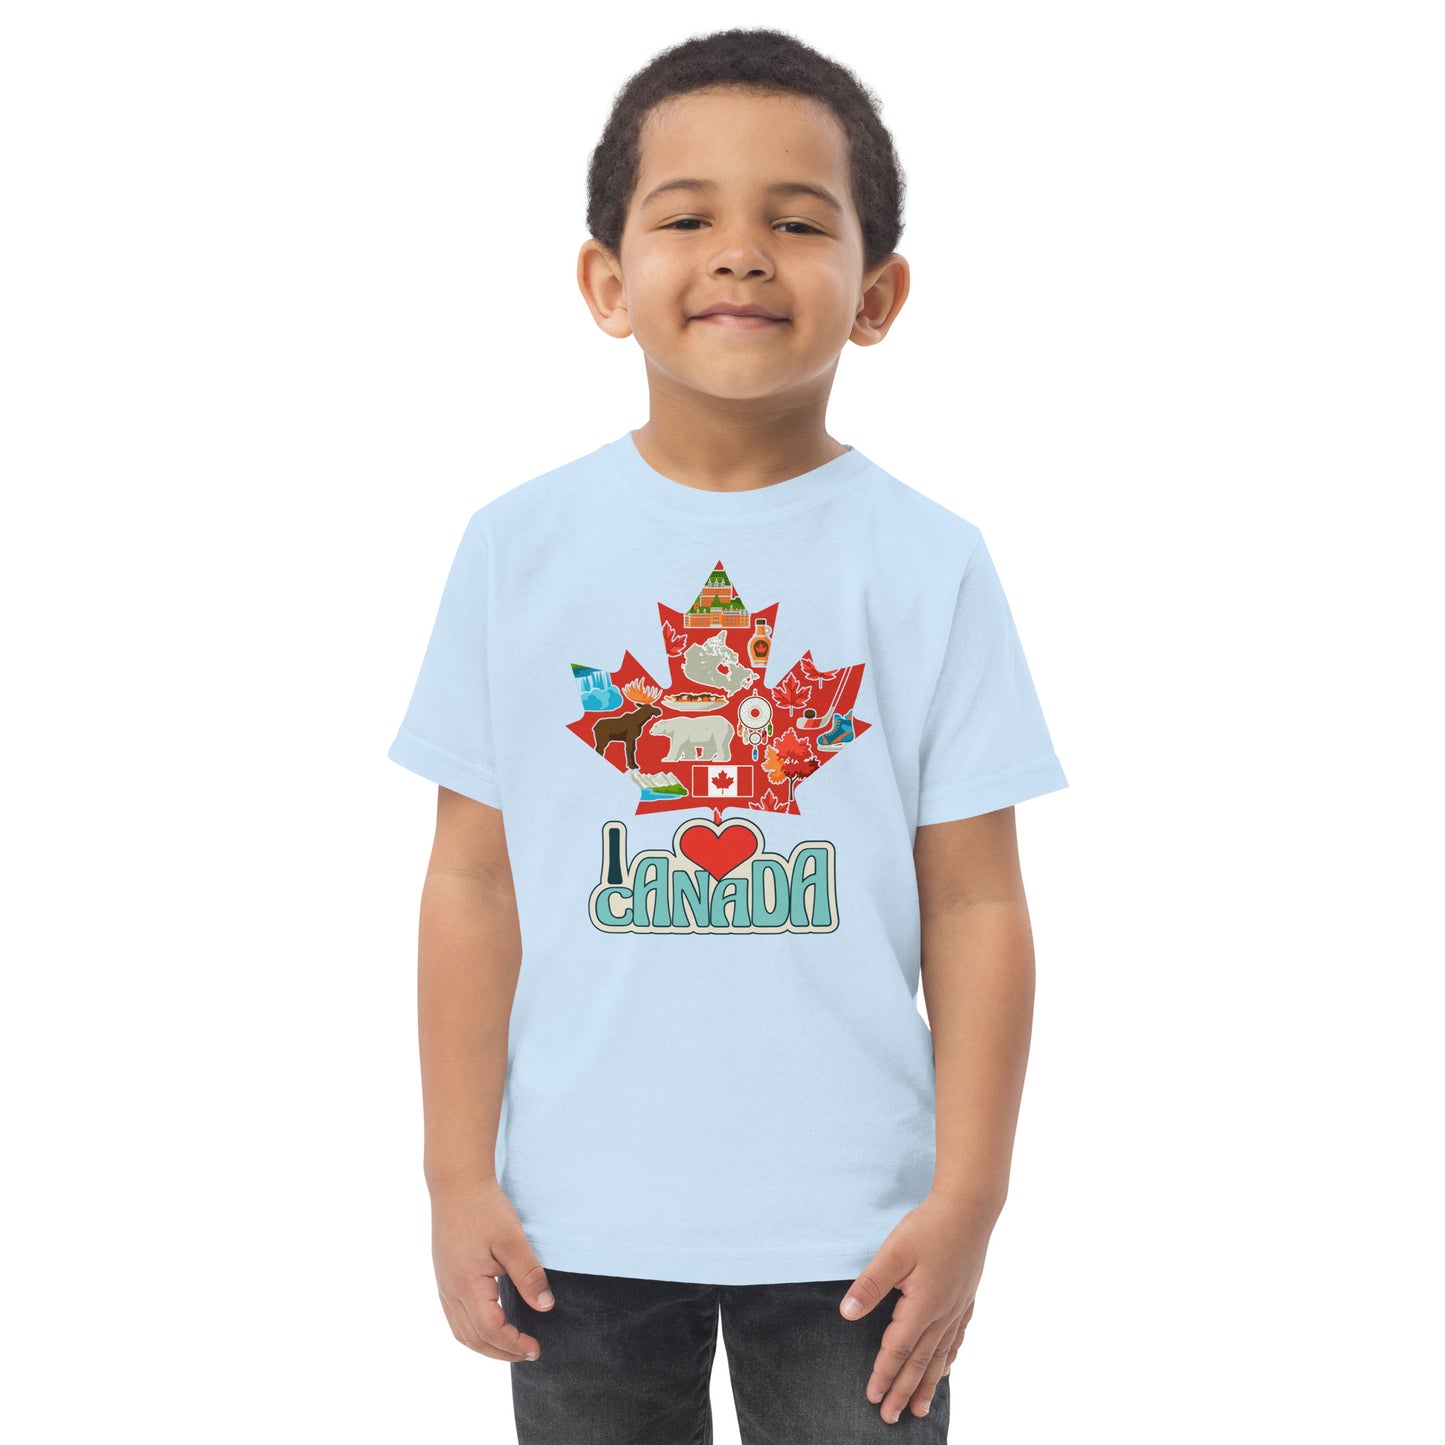 I Love Canada Toddler jersey t-shirt